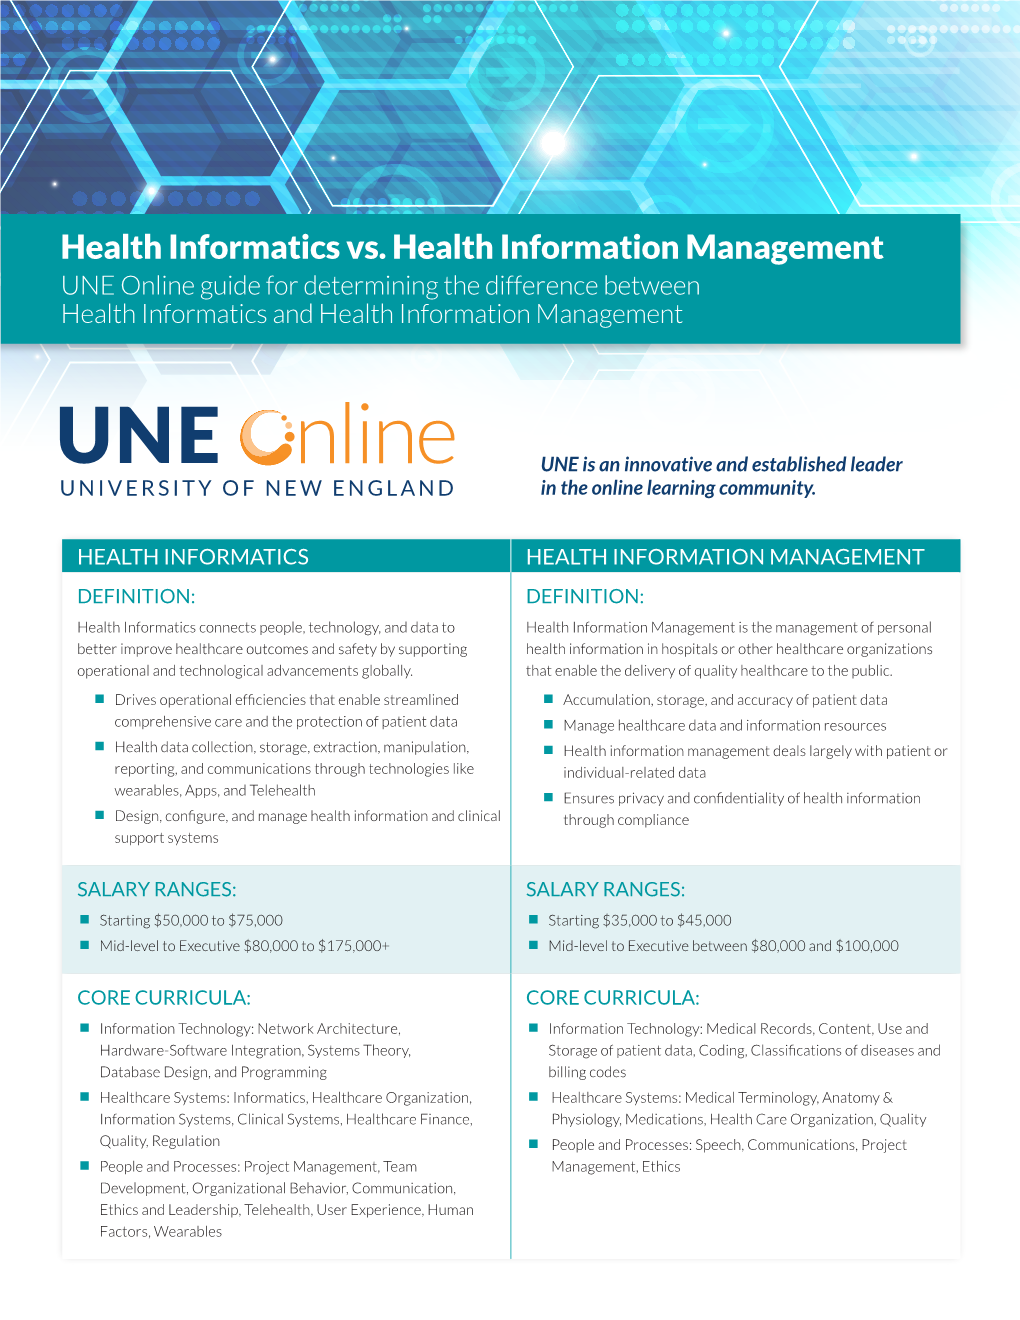 Health Informatics Vs. Health Information Management UNE Online Guide for Determining the Difference Between Health Informatics and Health Information Management